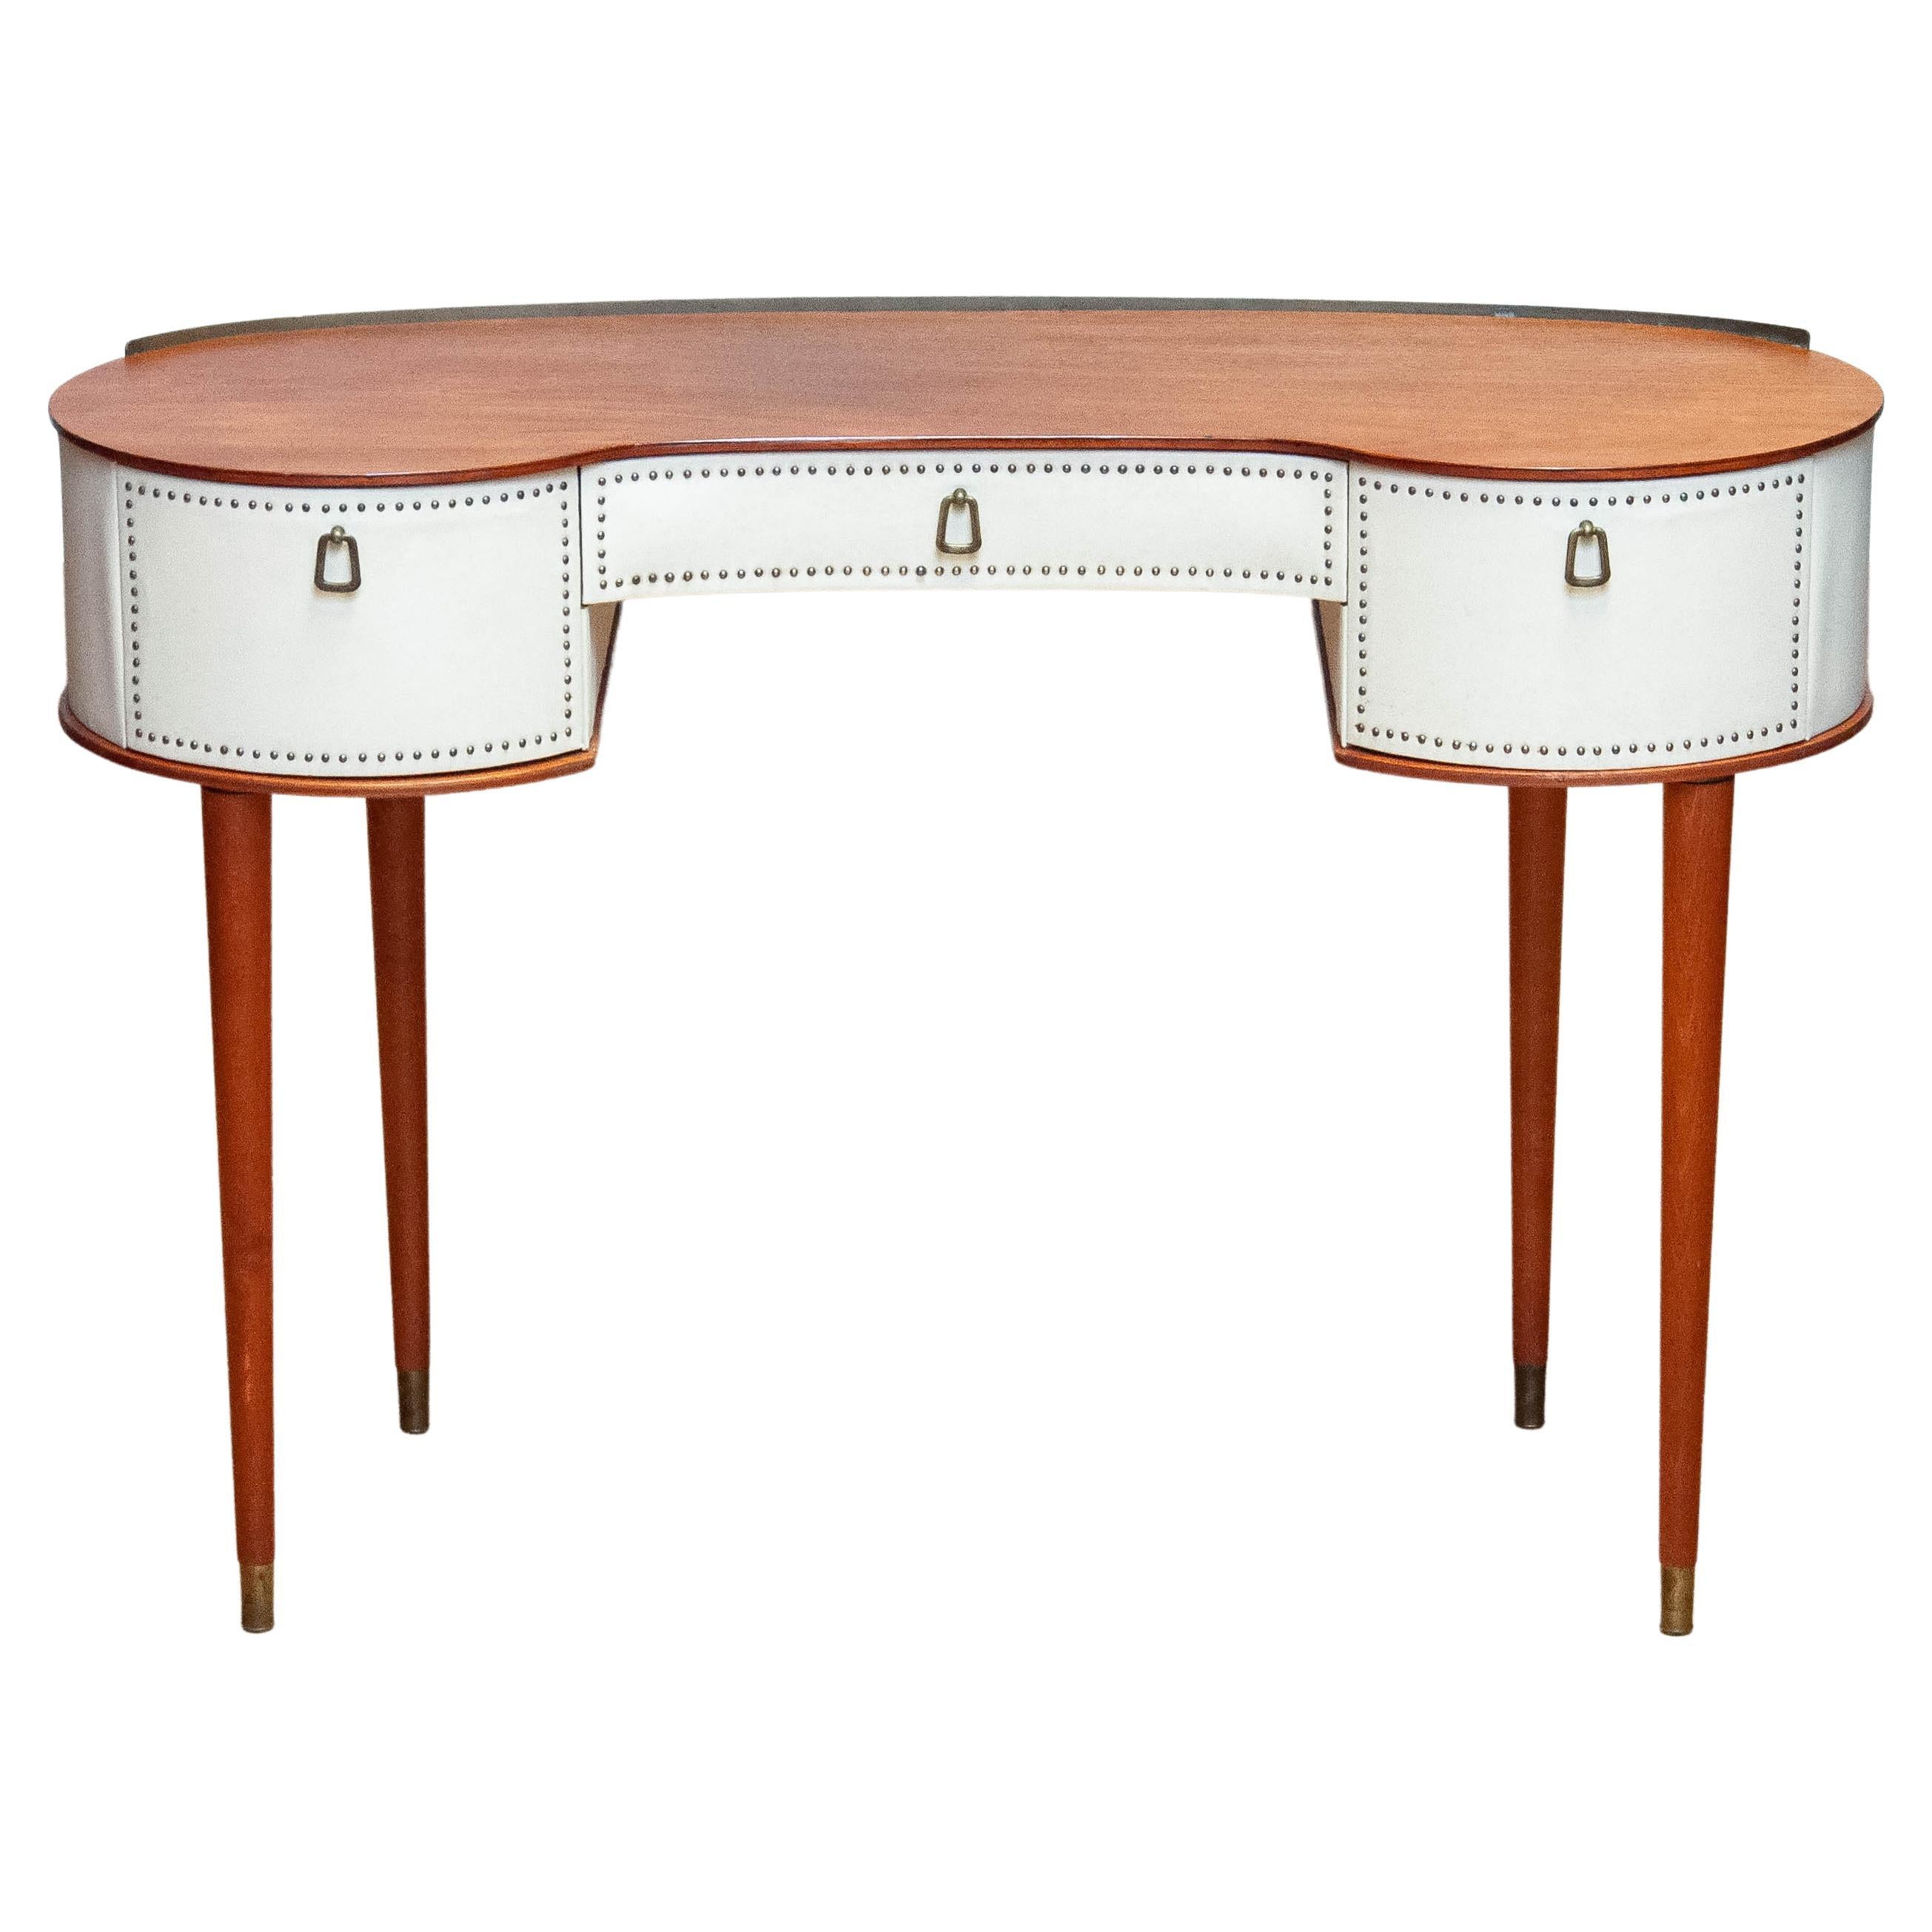 1950s Vanity Dressing Table Designed By Halvdan Pettersson For Tibro In Sweden.